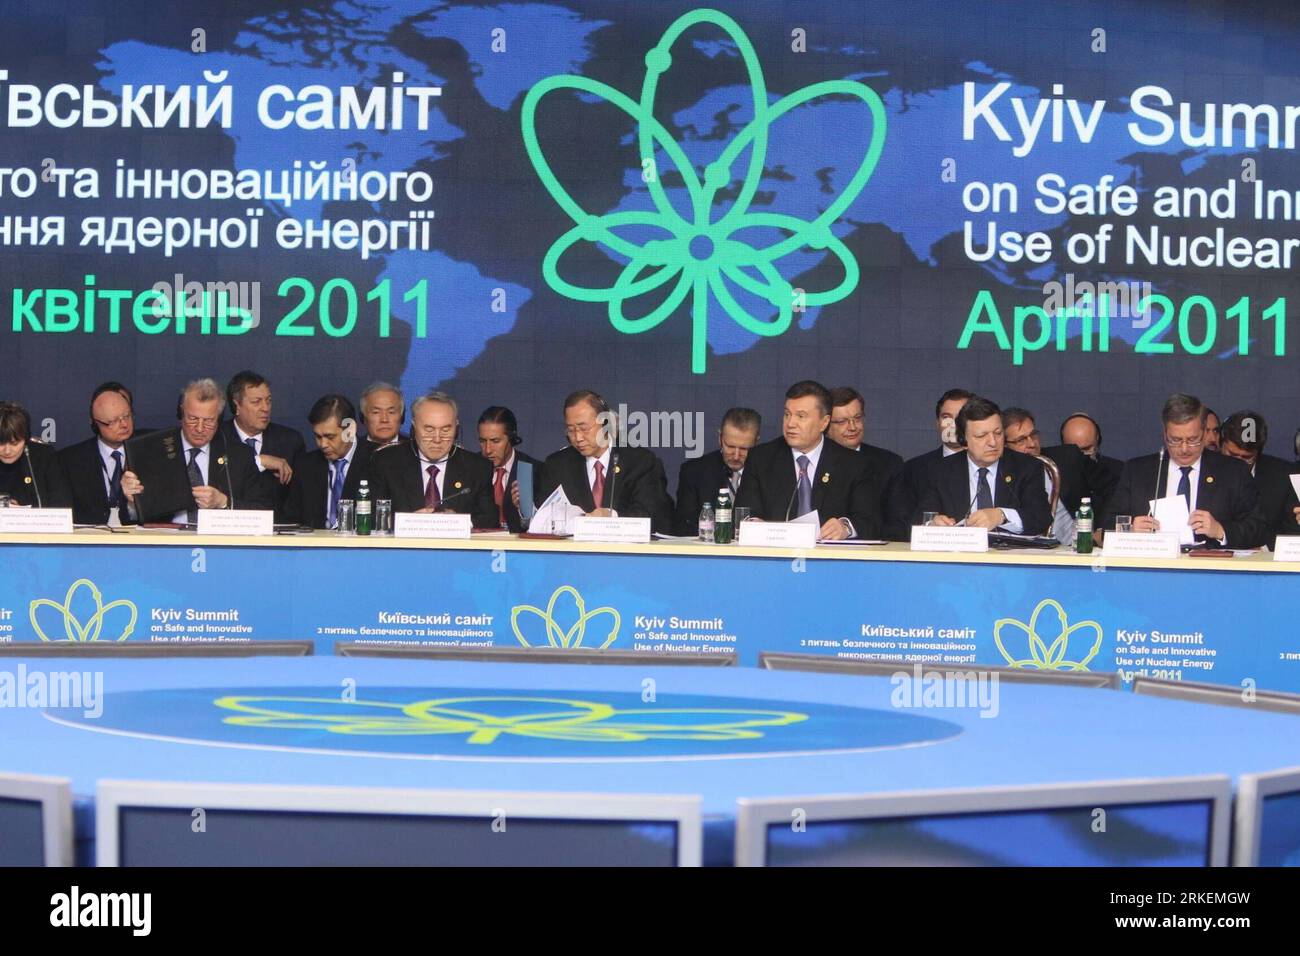 Bildnummer: 55274521  Datum: 19.04.2011  Copyright: imago/Xinhua (110419) -- KIEV, April 19, 2011 (Xinhua) -- Representatives from various nations and areas attend the Kiev Summit on safe and innovative use of nuclear energy in Kiev, capital of Ukraine, April 19, 2011. (Xinhua/Lu Jinbo) (lyi) UKRAINE-KIEV-NUCLEAR-SUMIT PUBLICATIONxNOTxINxCHN Politik People Atomenergie Tschernobylkonferenz Konferenz atomare Sicherheit kbdig xub 2011 quer premiumd     Bildnummer 55274521 Date 19 04 2011 Copyright Imago XINHUA  Kiev April 19 2011 XINHUA Representatives from Various Nations and Areas attend The Ki Stock Photo